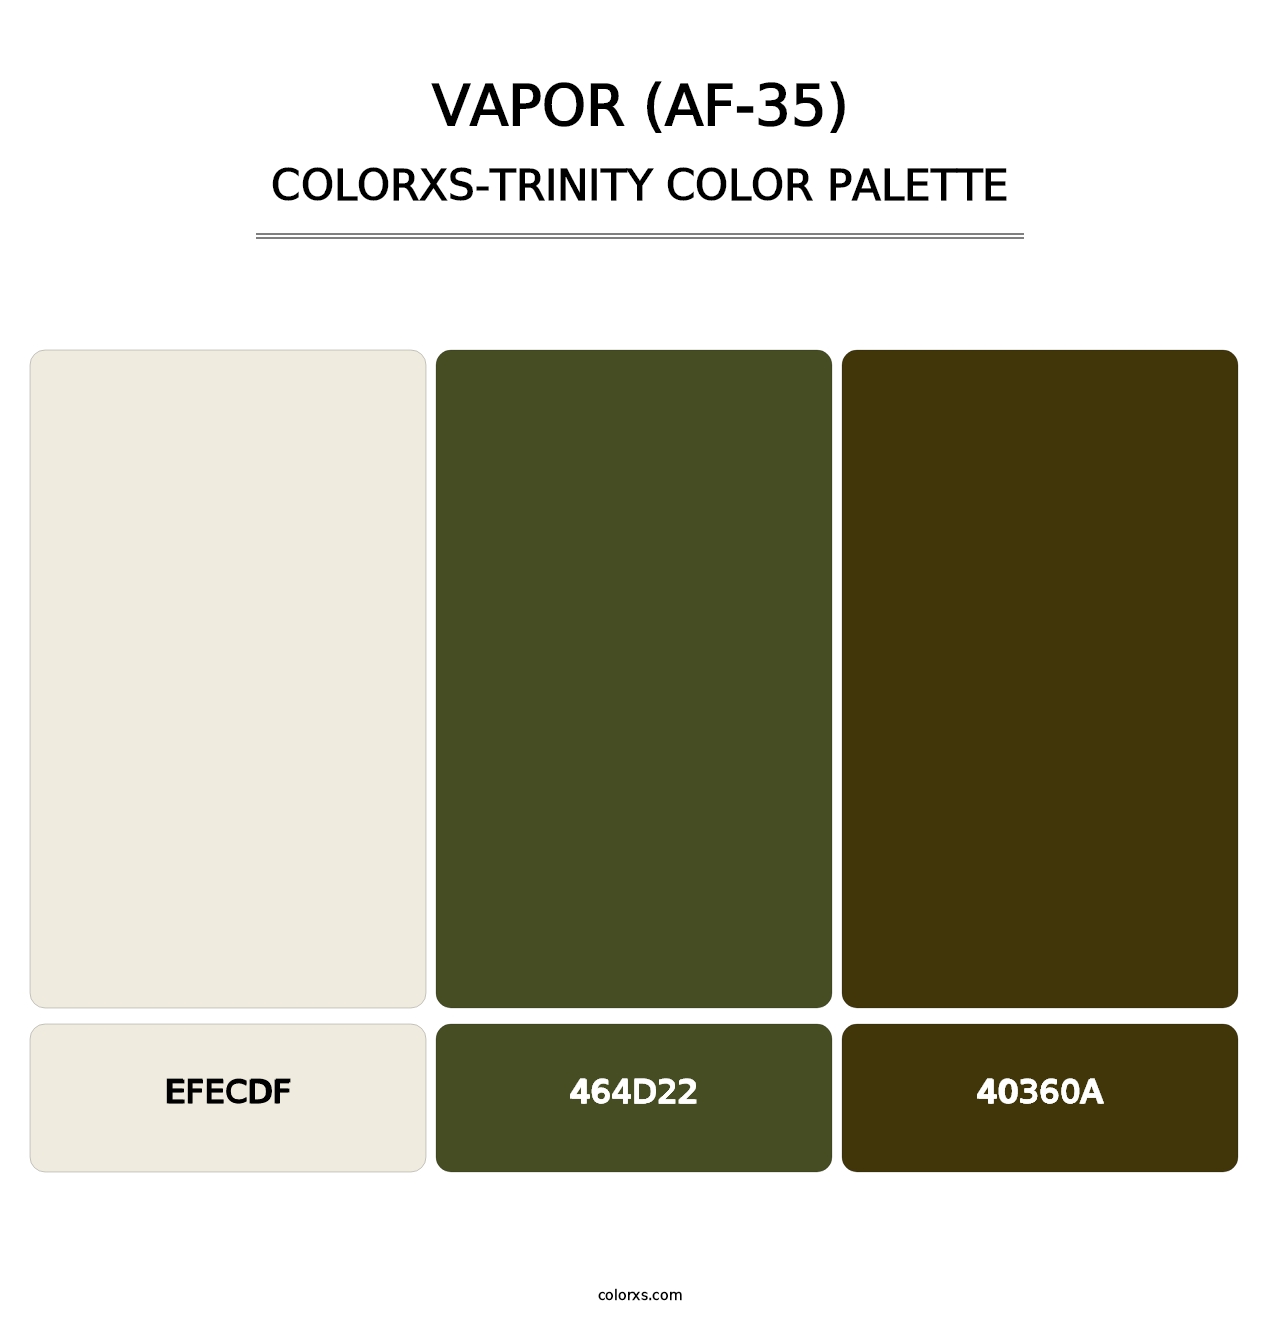 Vapor (AF-35) - Colorxs Trinity Palette